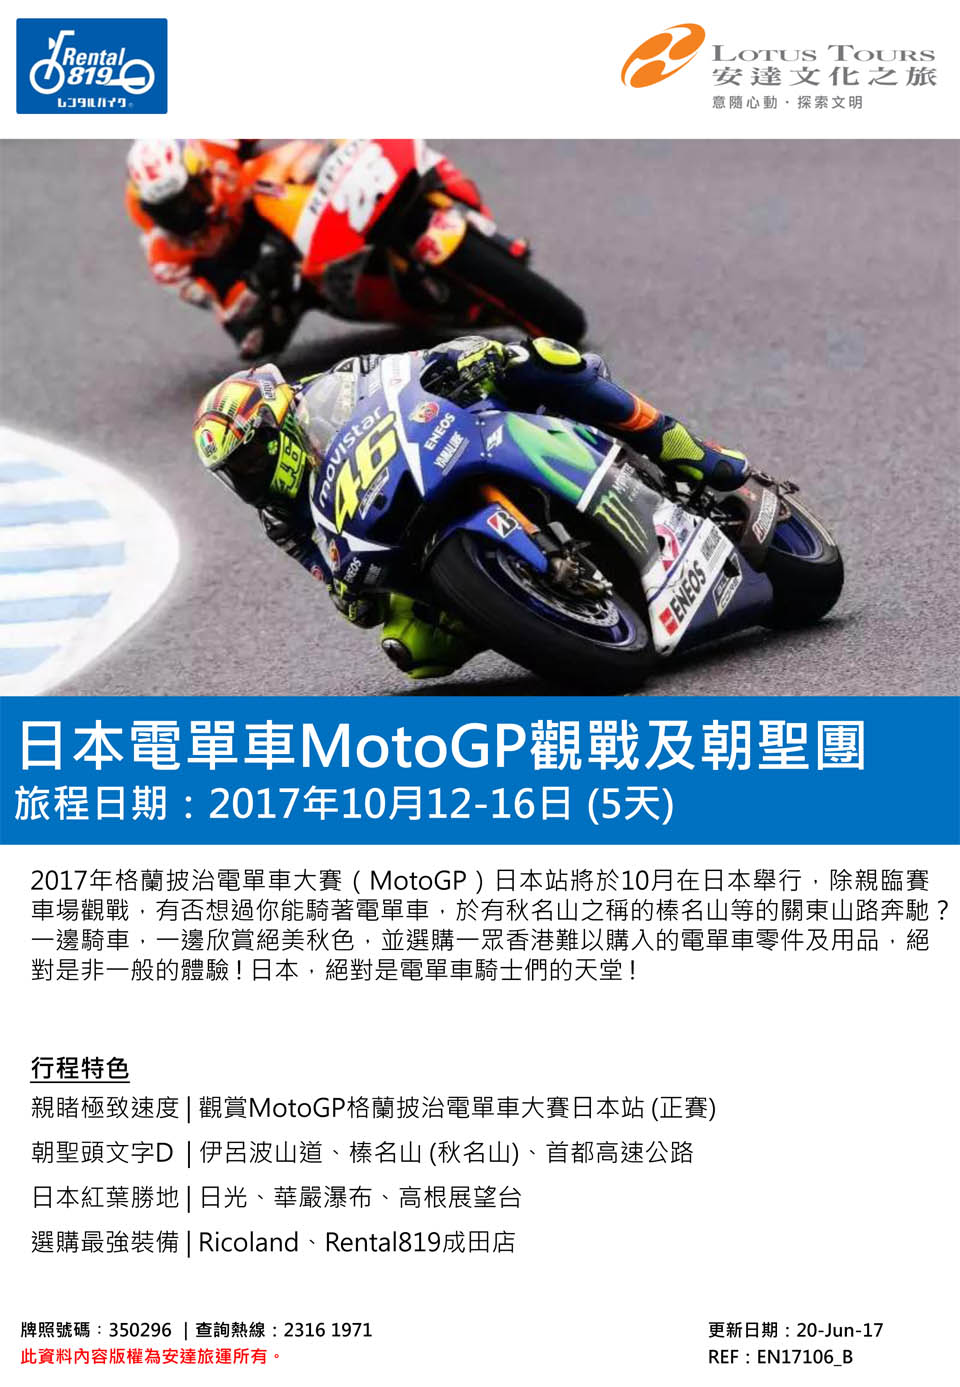 2017 RENTAL 819 JAPAN MOTOGP